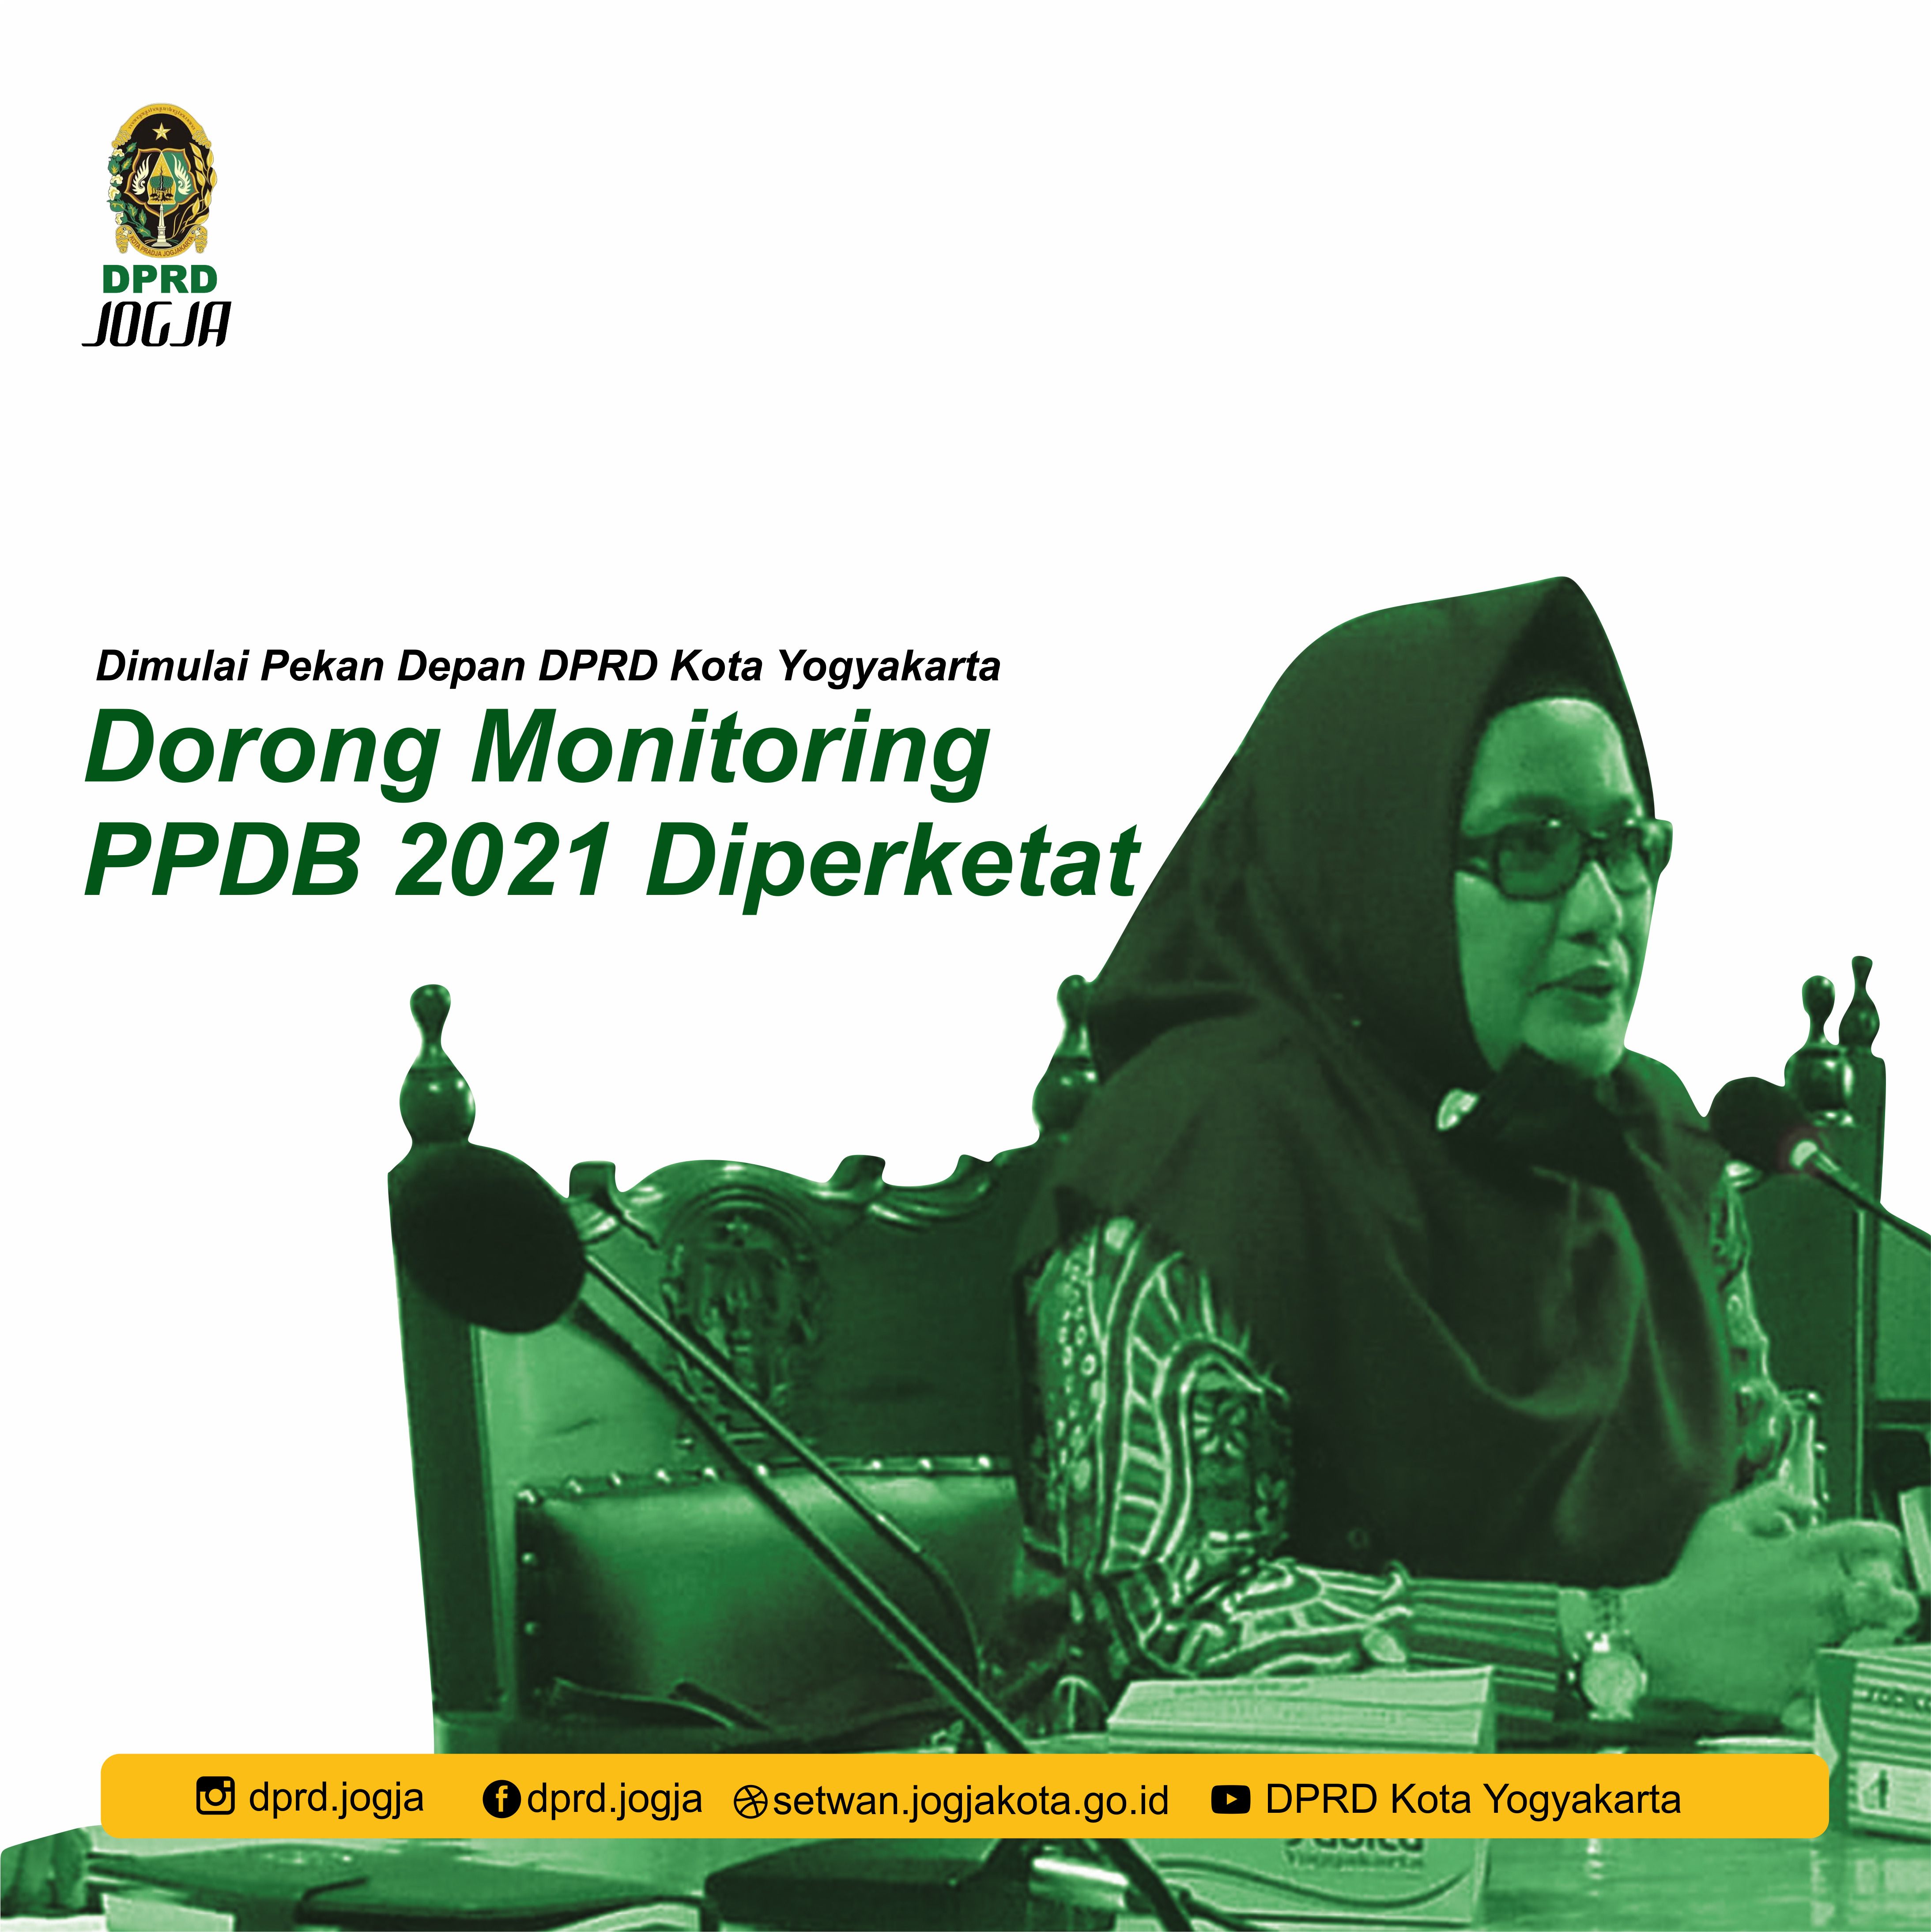 Dimulai Pekan Depan, DPRD Kota Yogya Dorong Monitoring PPDB 2021 Diperketat